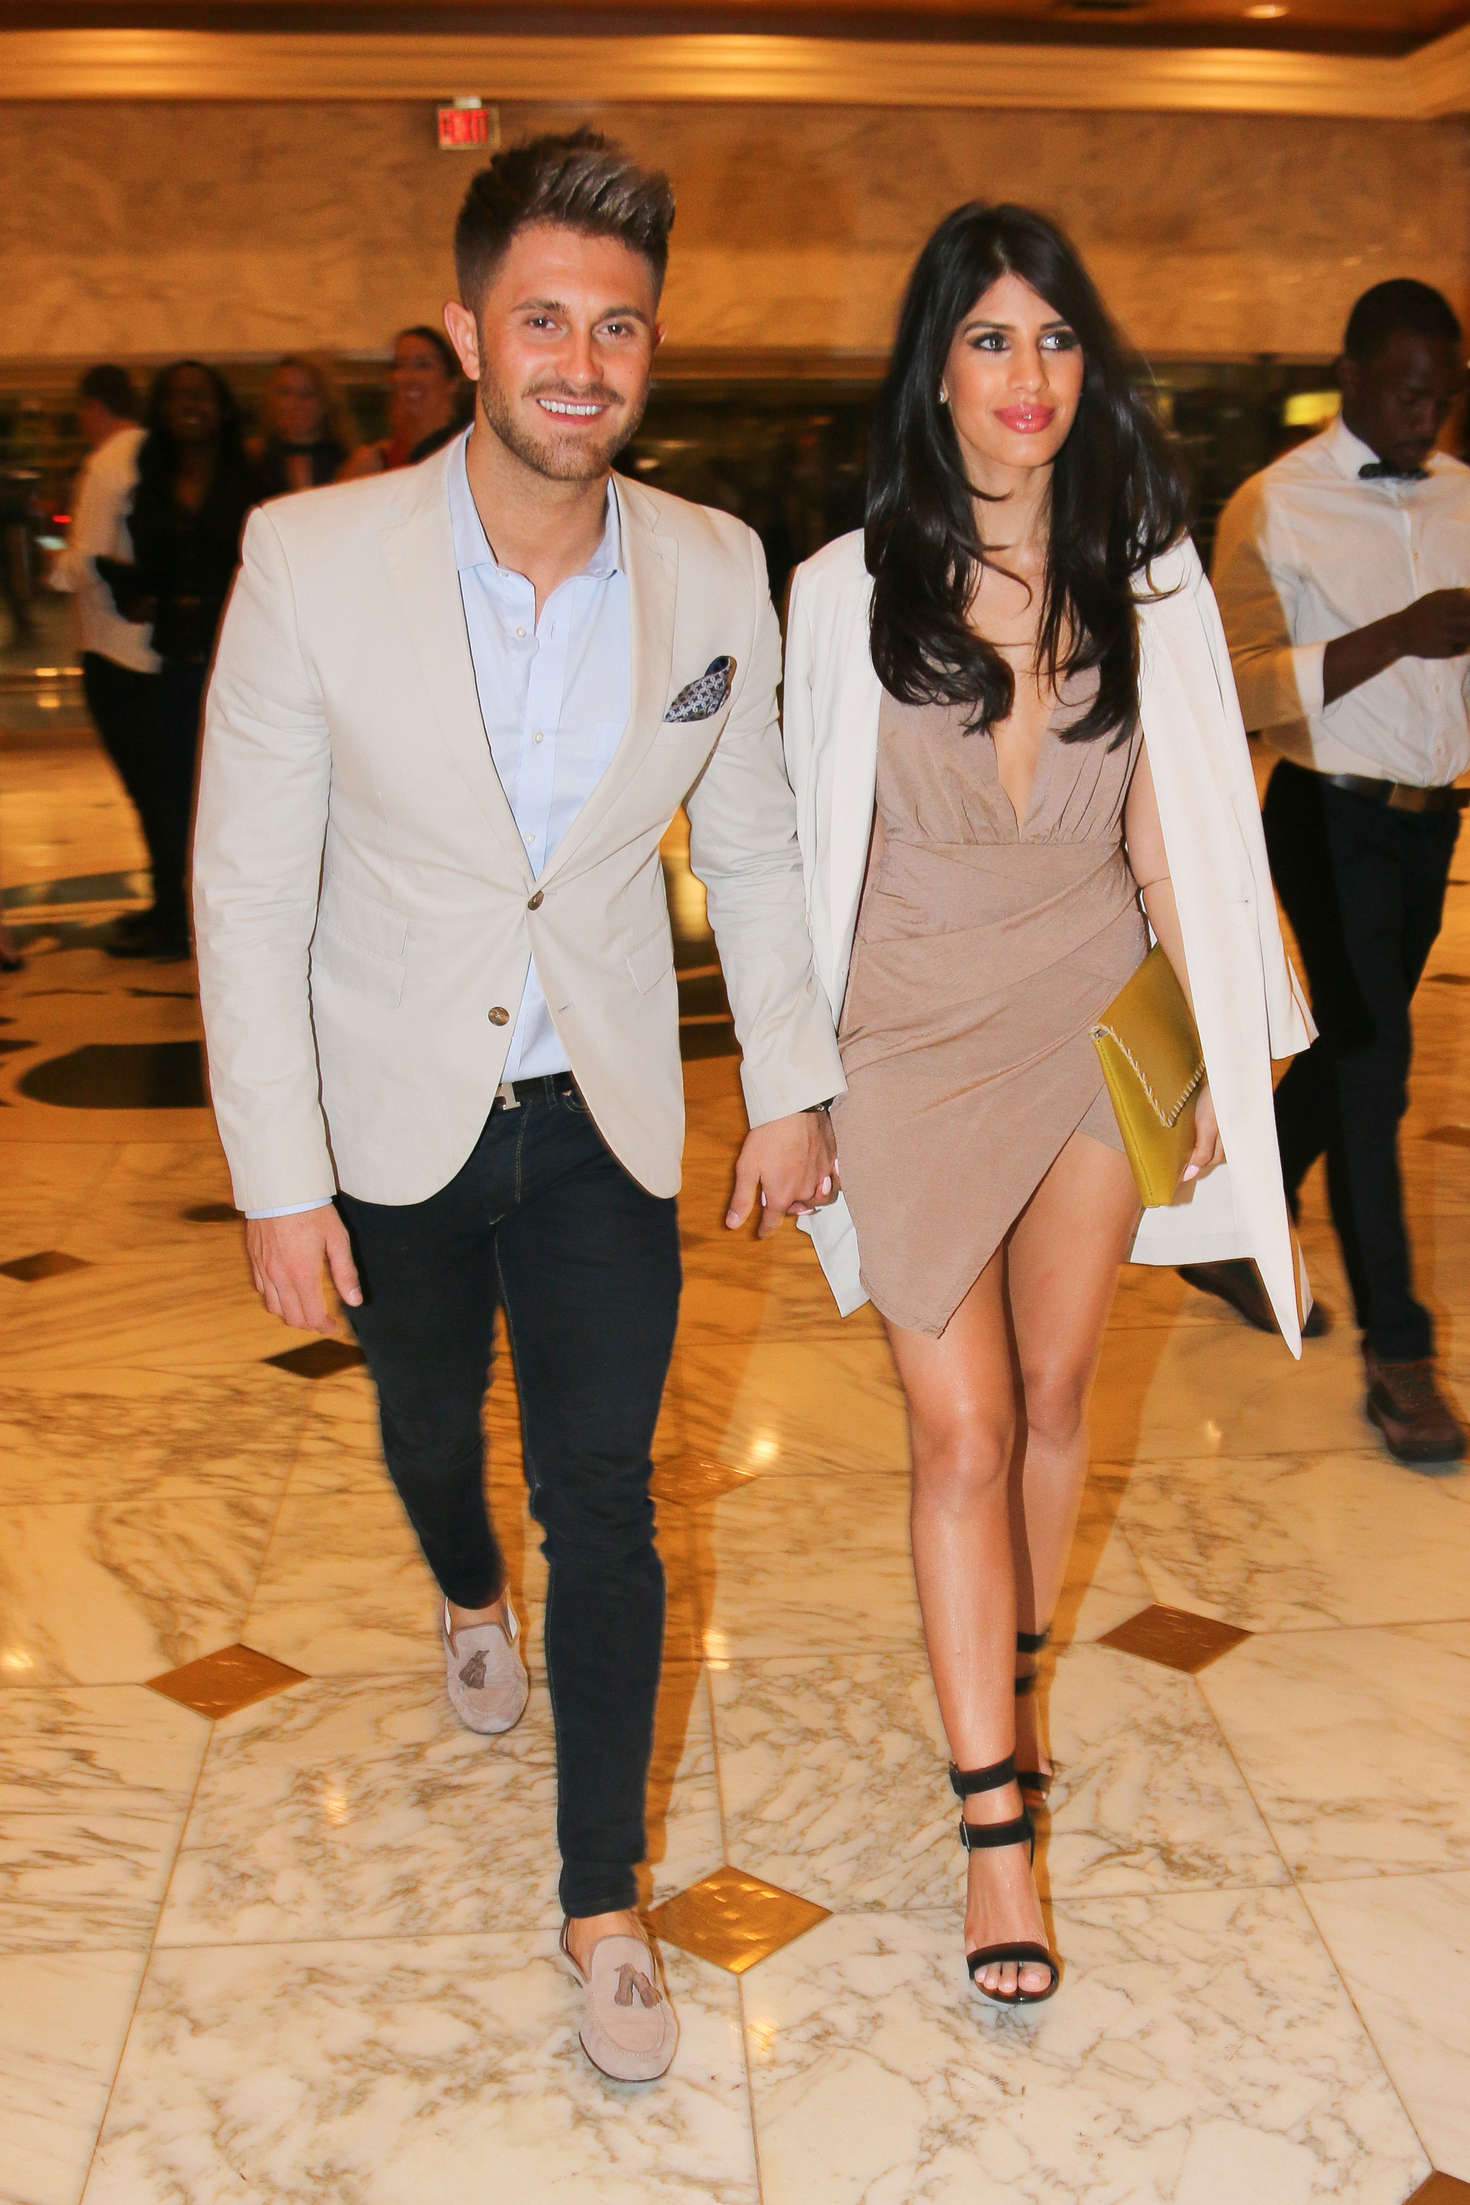 Jasmin Walia and her boyfriend Ross Worswick out in Las Vegas